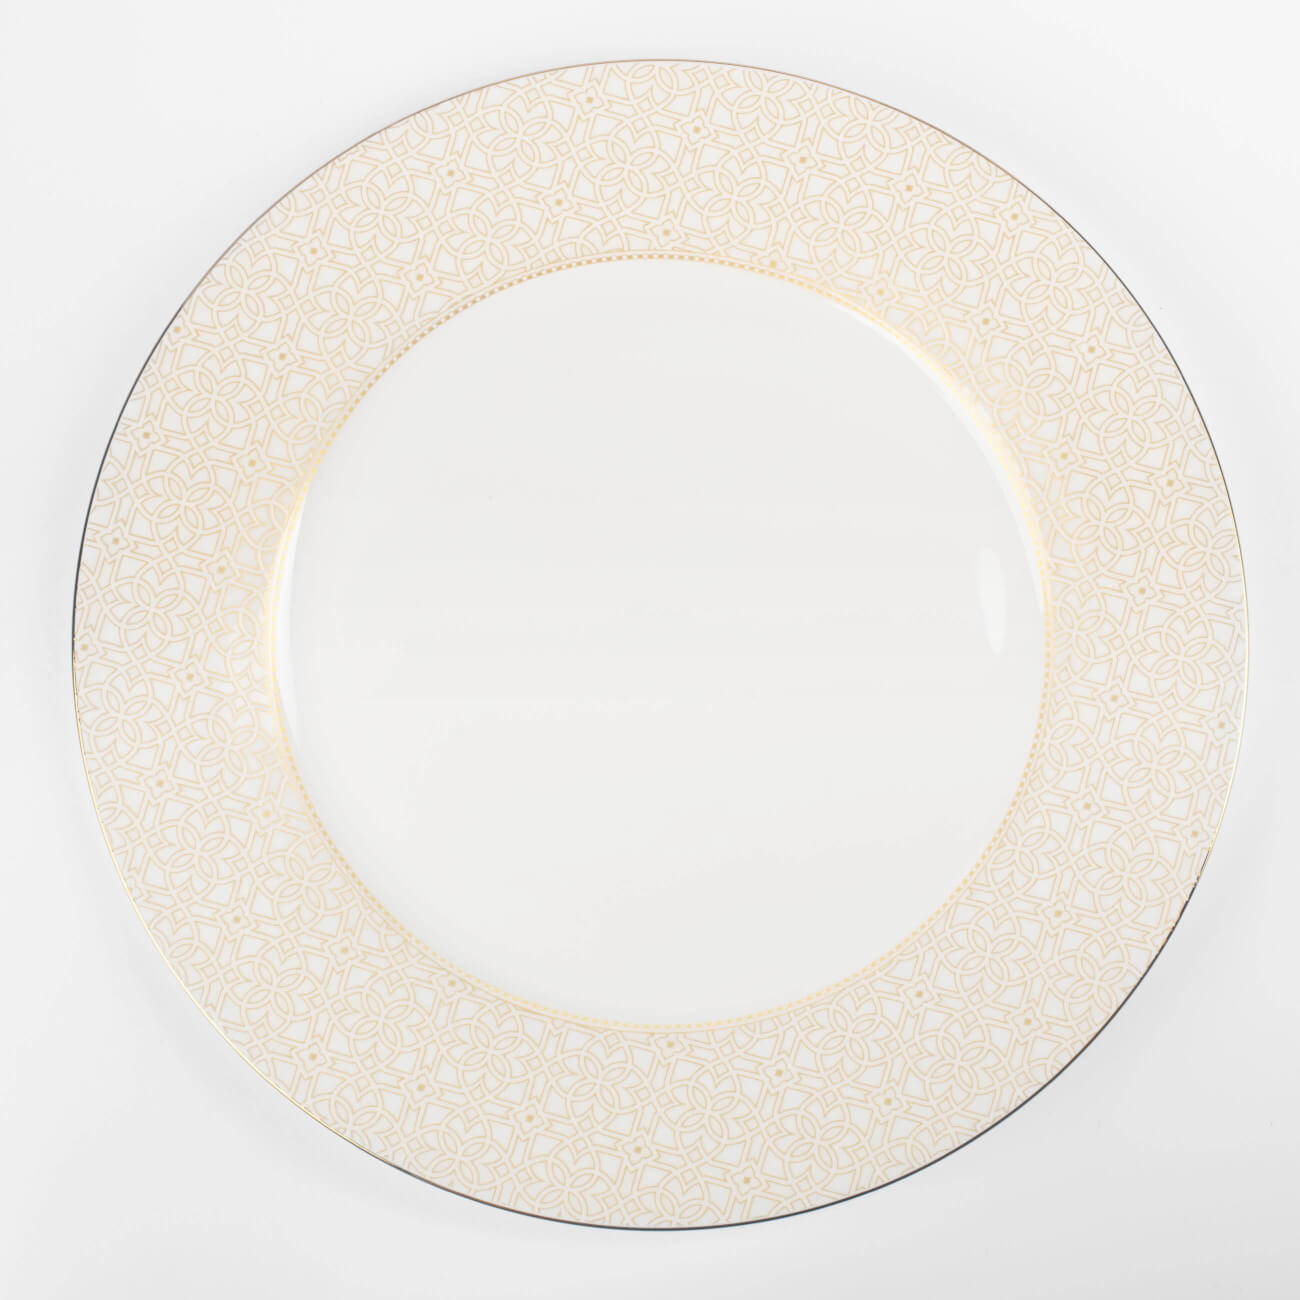 Тарелка обеденная, 27 см, фарфор F, с золотистым кантом, Орнамент, Liberty kuchenland тарелка обеденная 28 см фарфор f antarctica